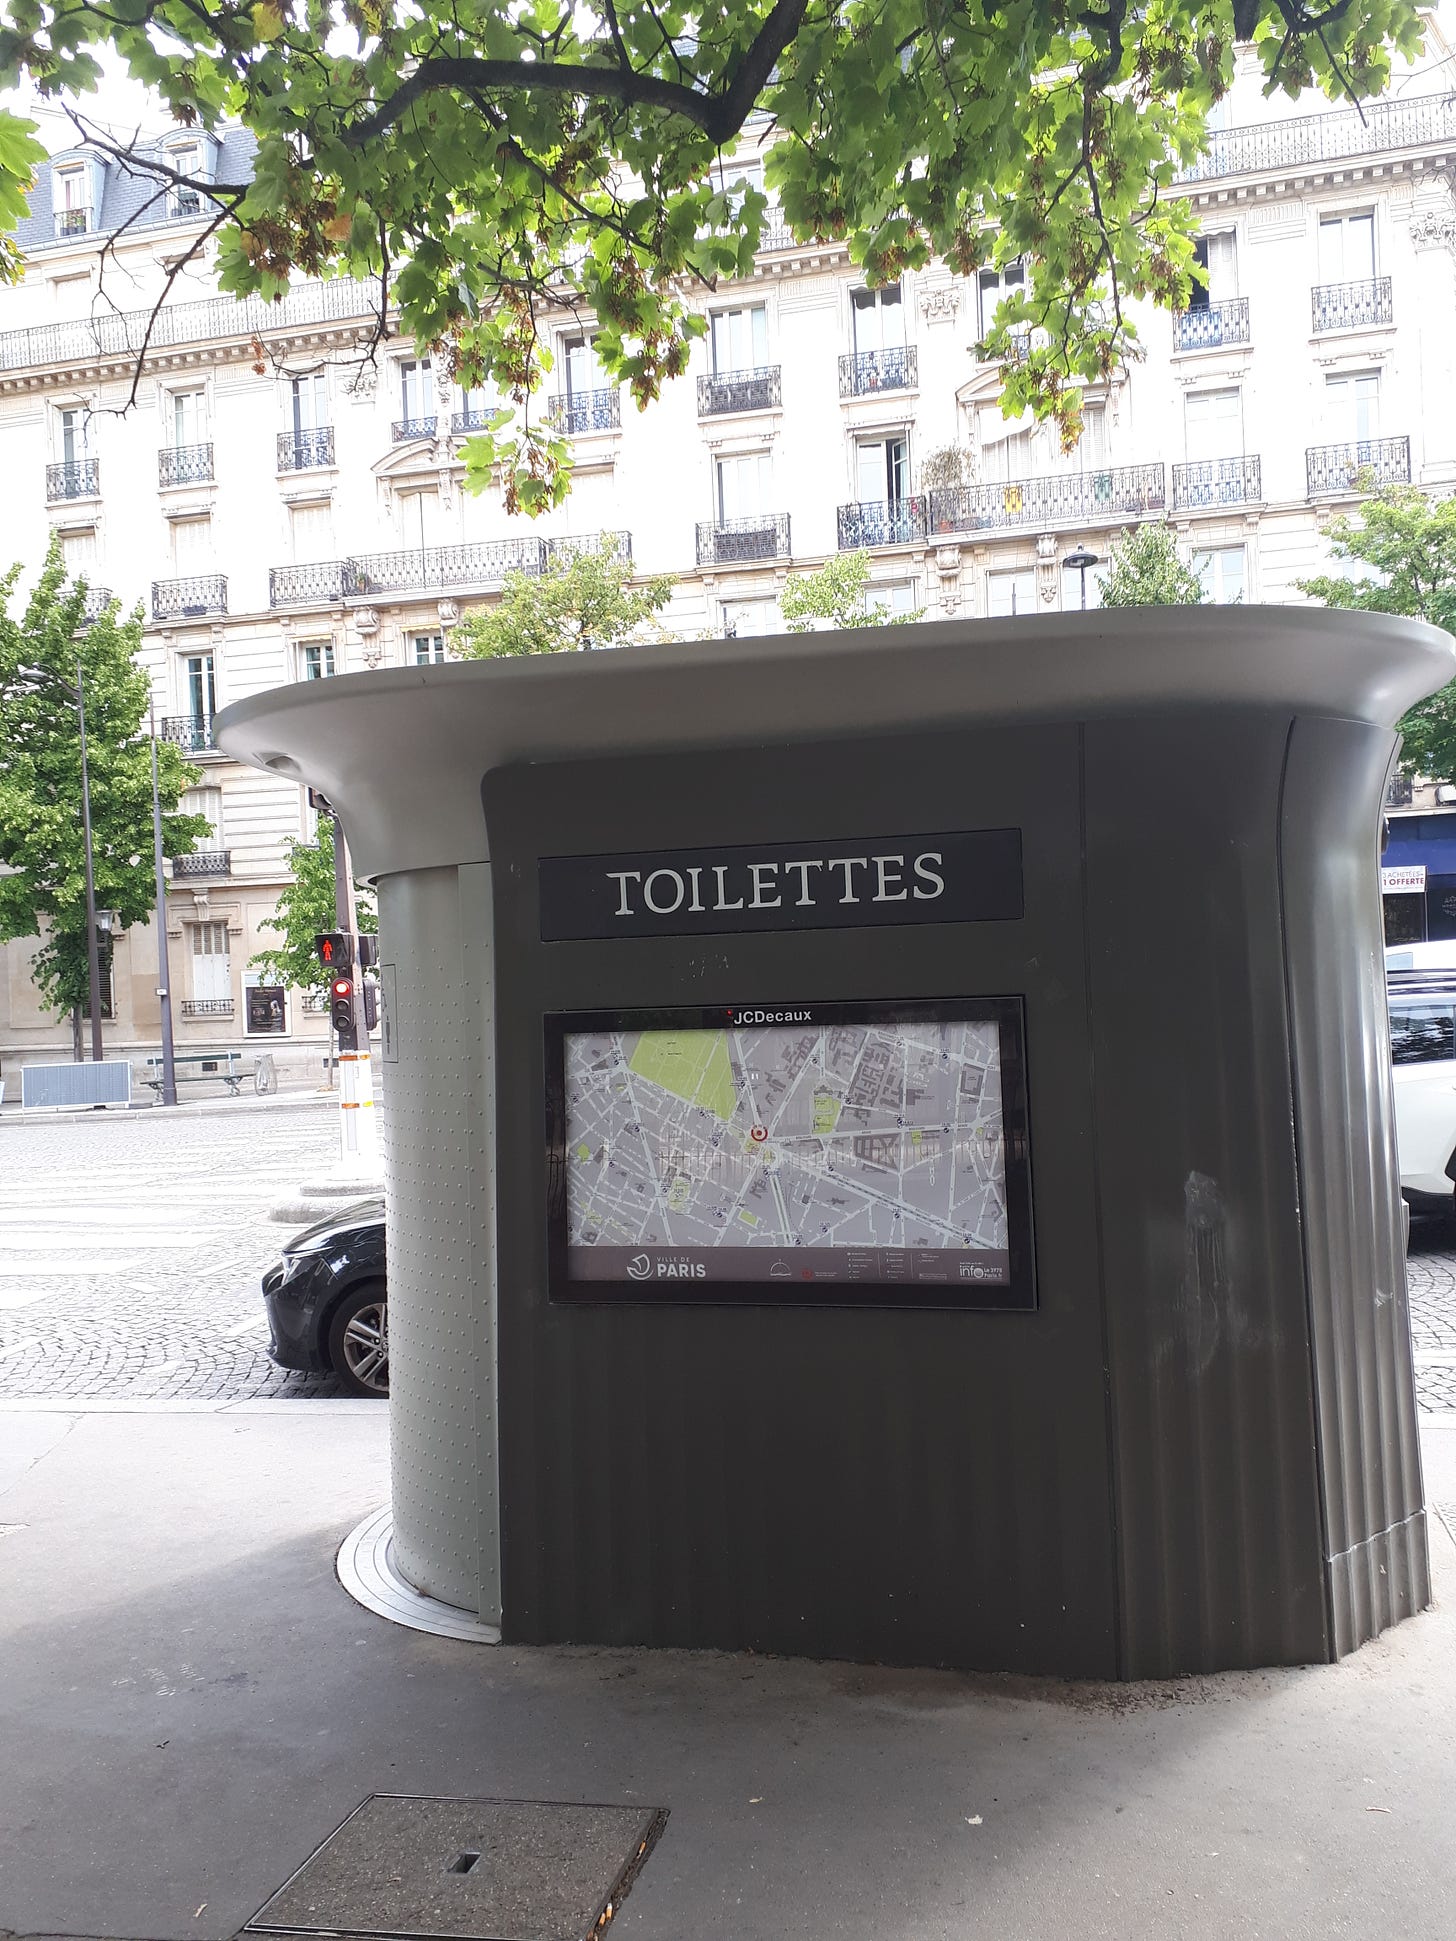 Large oval 'kiosk' housing a public washroom on a Paris street.